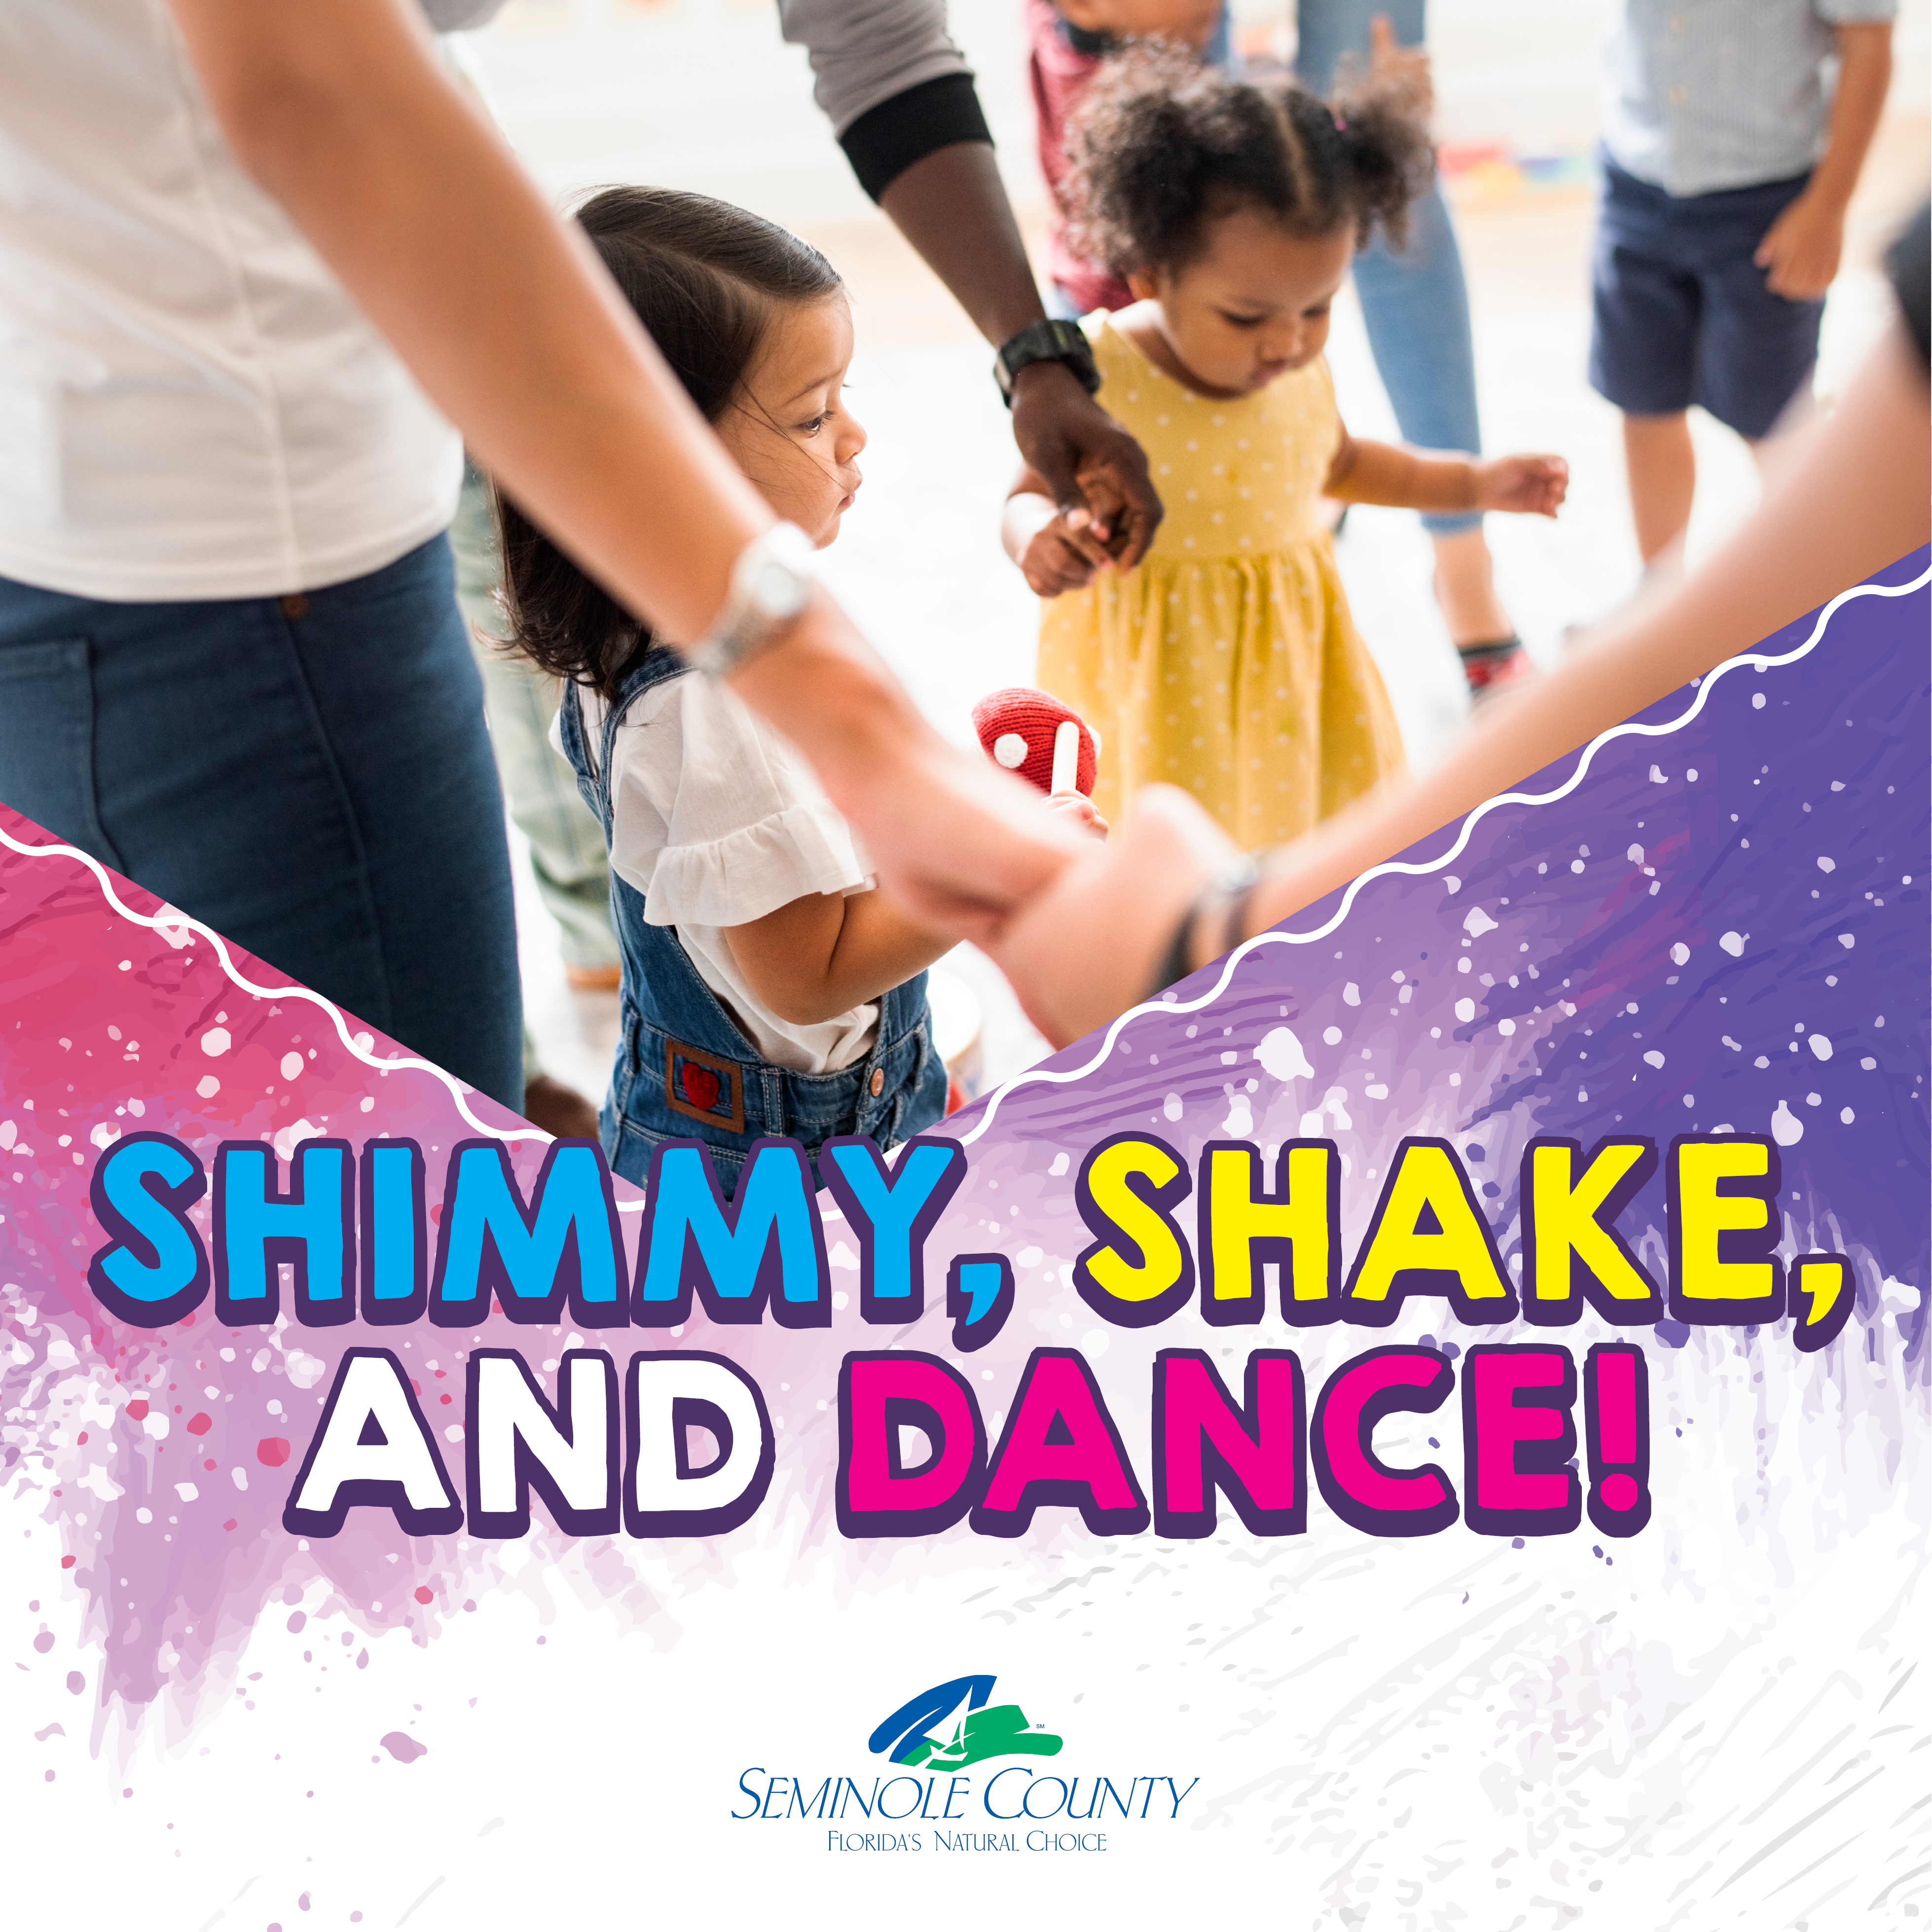 Shimmy, Shake, and Dance!